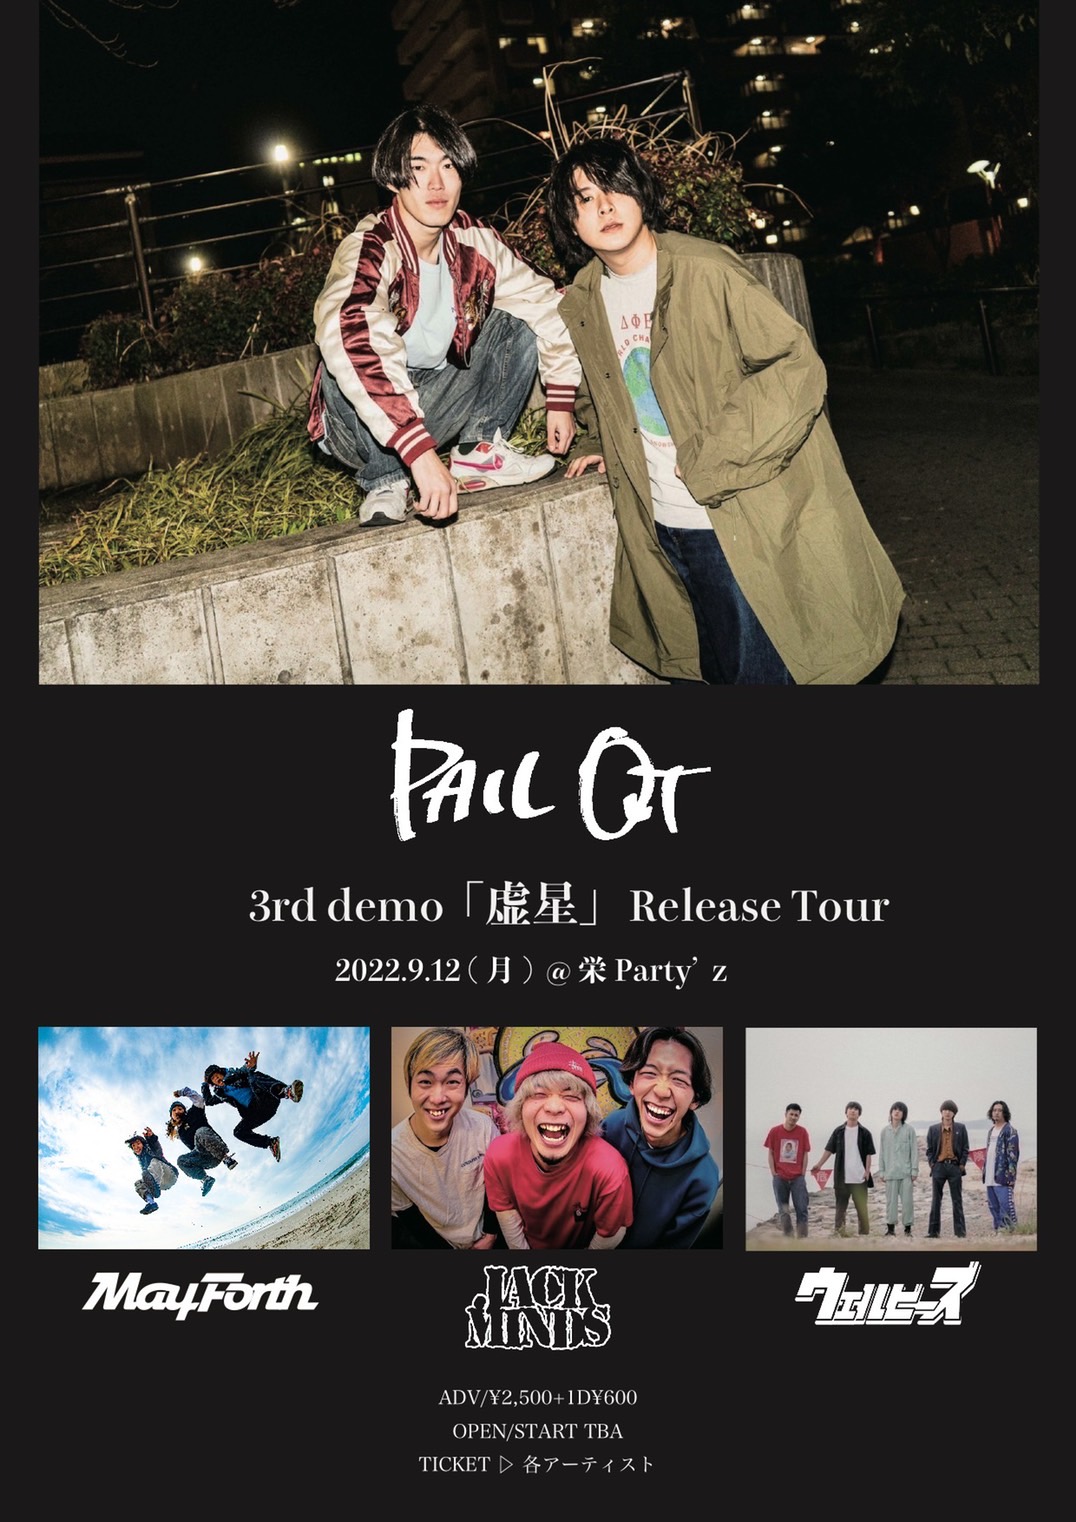 PAIL OUT  3rd demo 『虚星』Release Tour